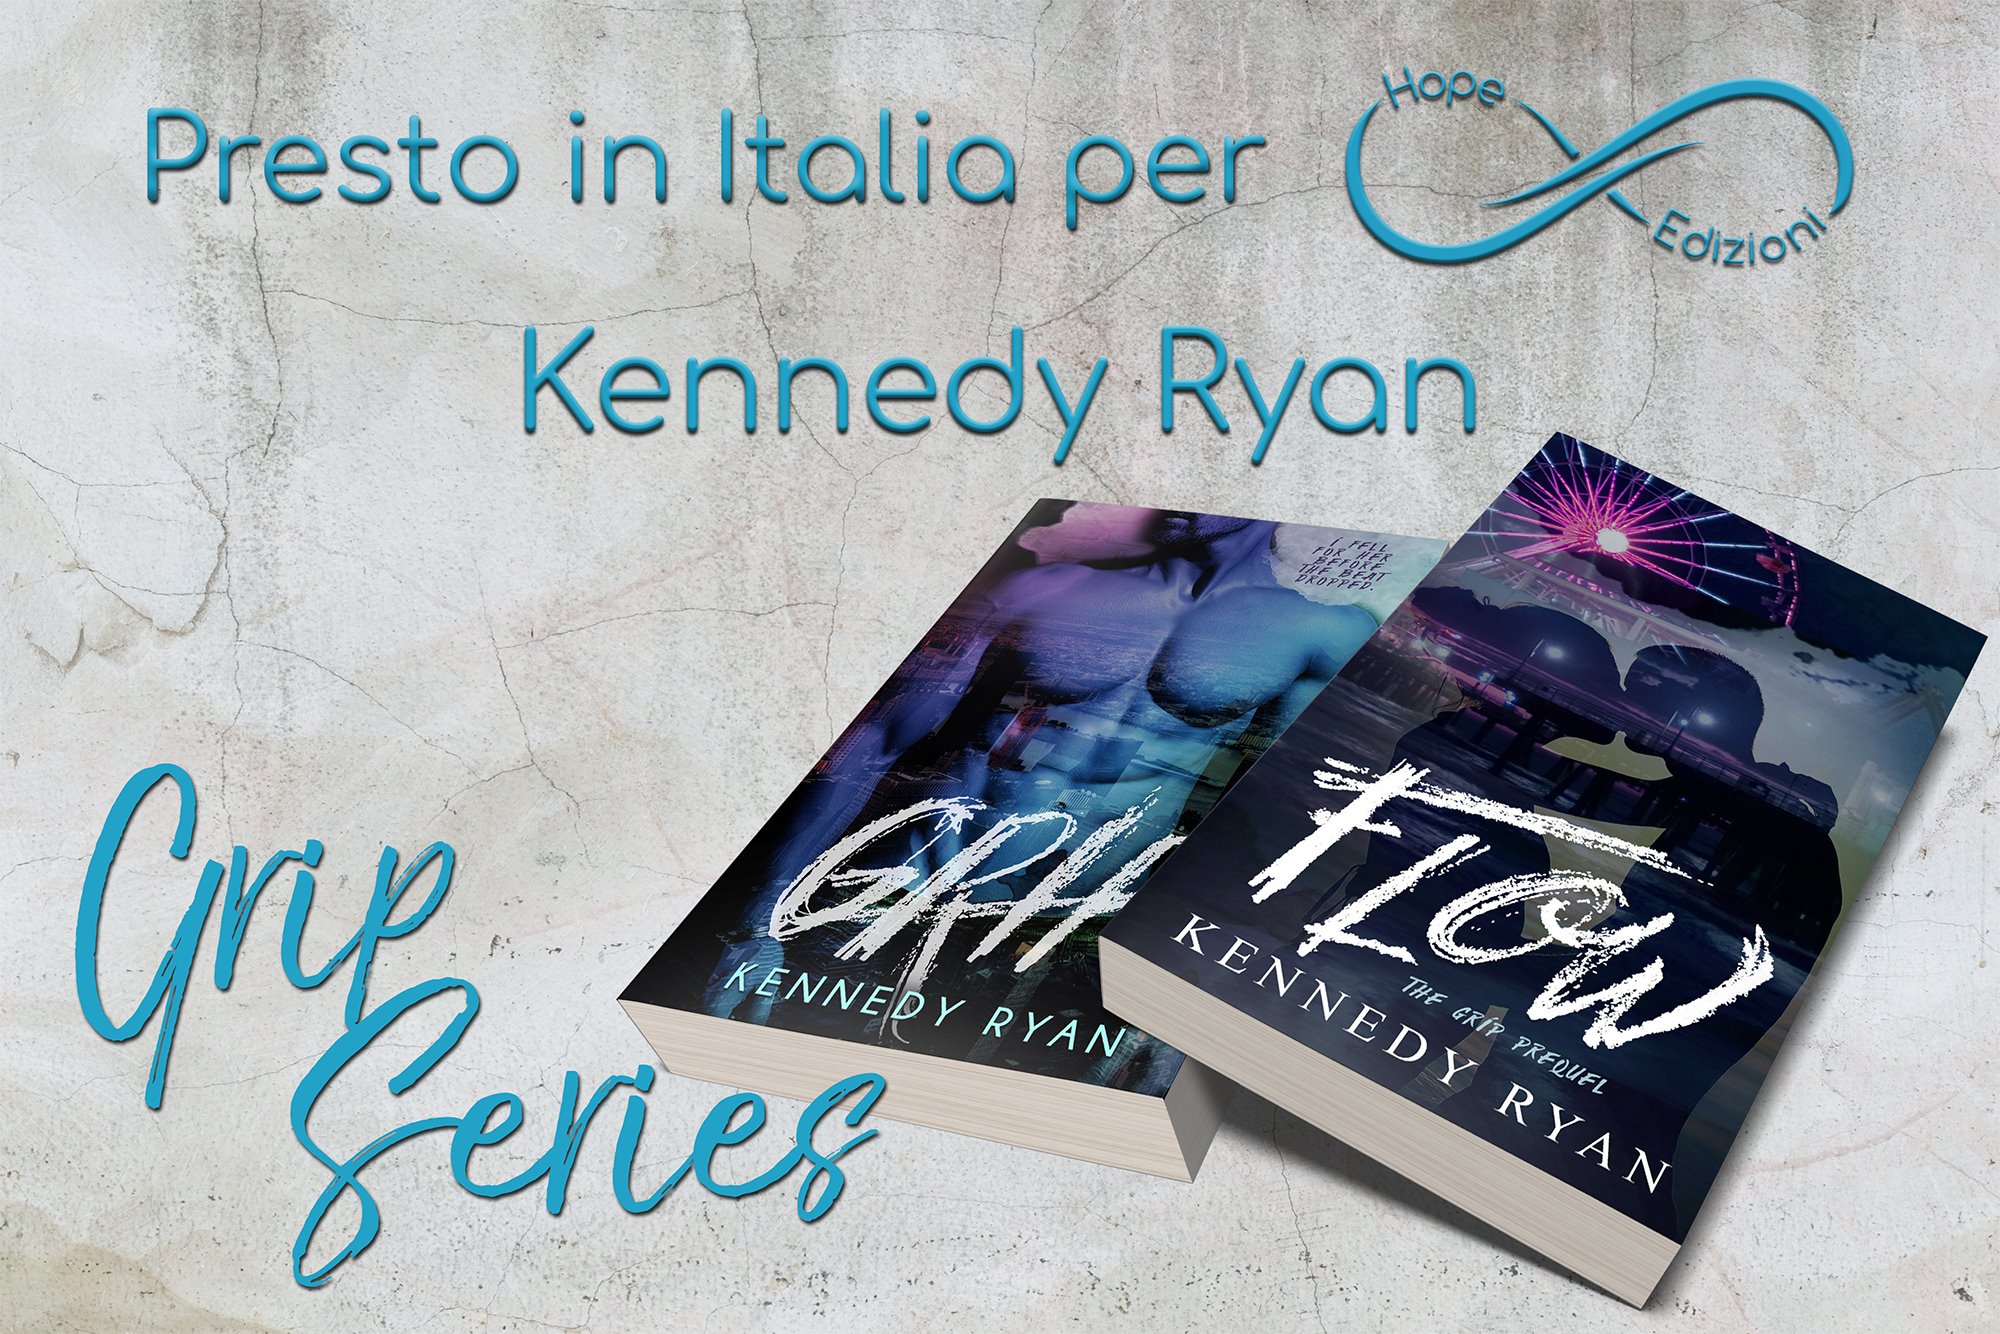 Presto in Italia… Kennedy Ryan!